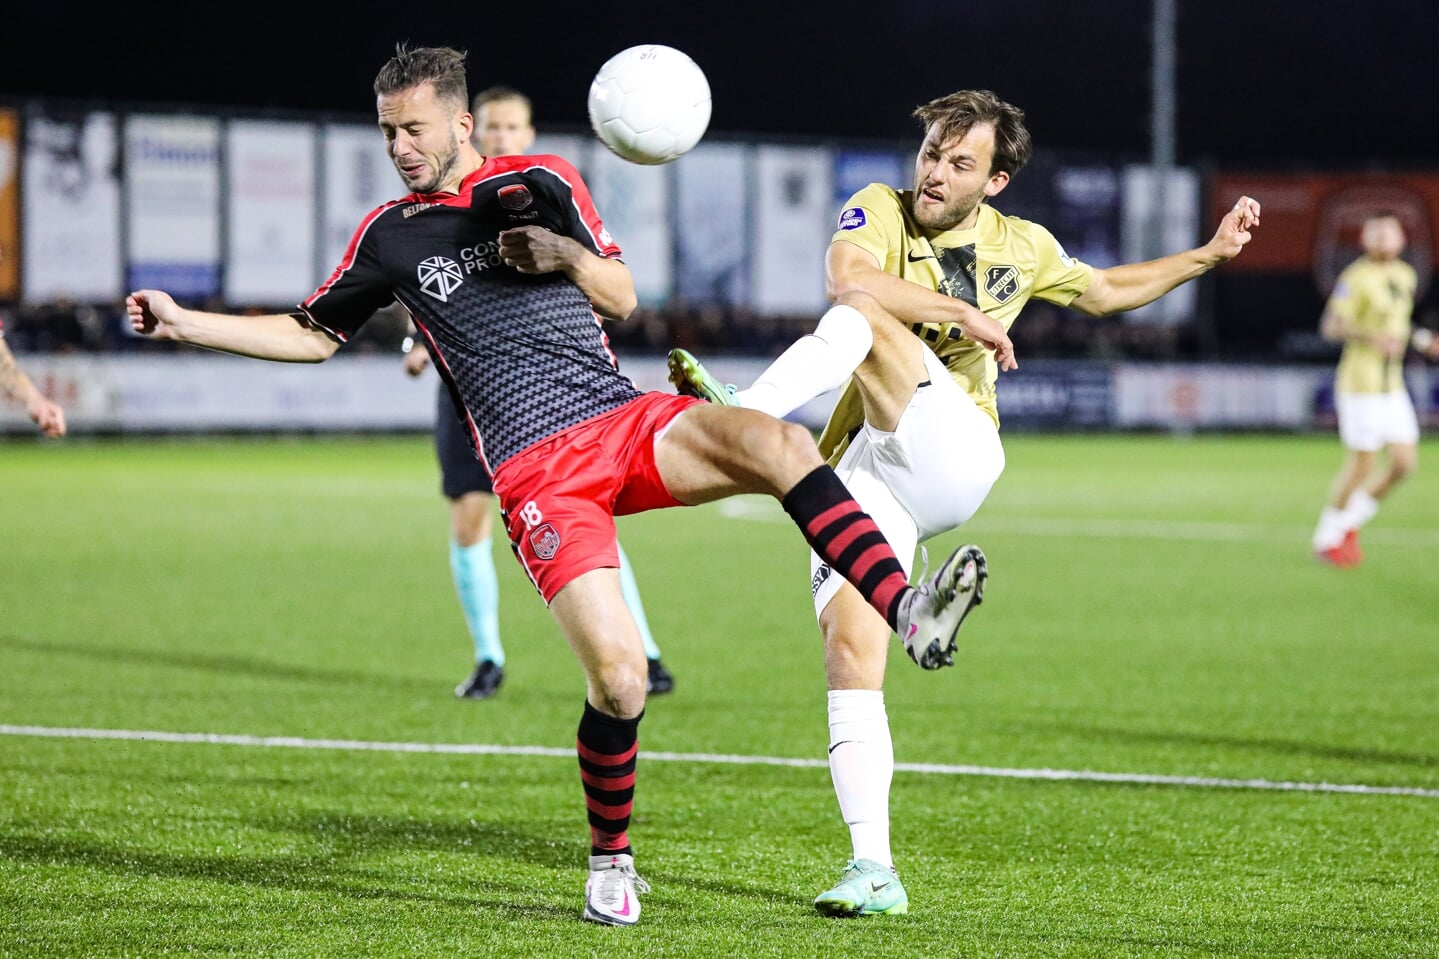 • SteDoCo - FC Utrecht (0-5).